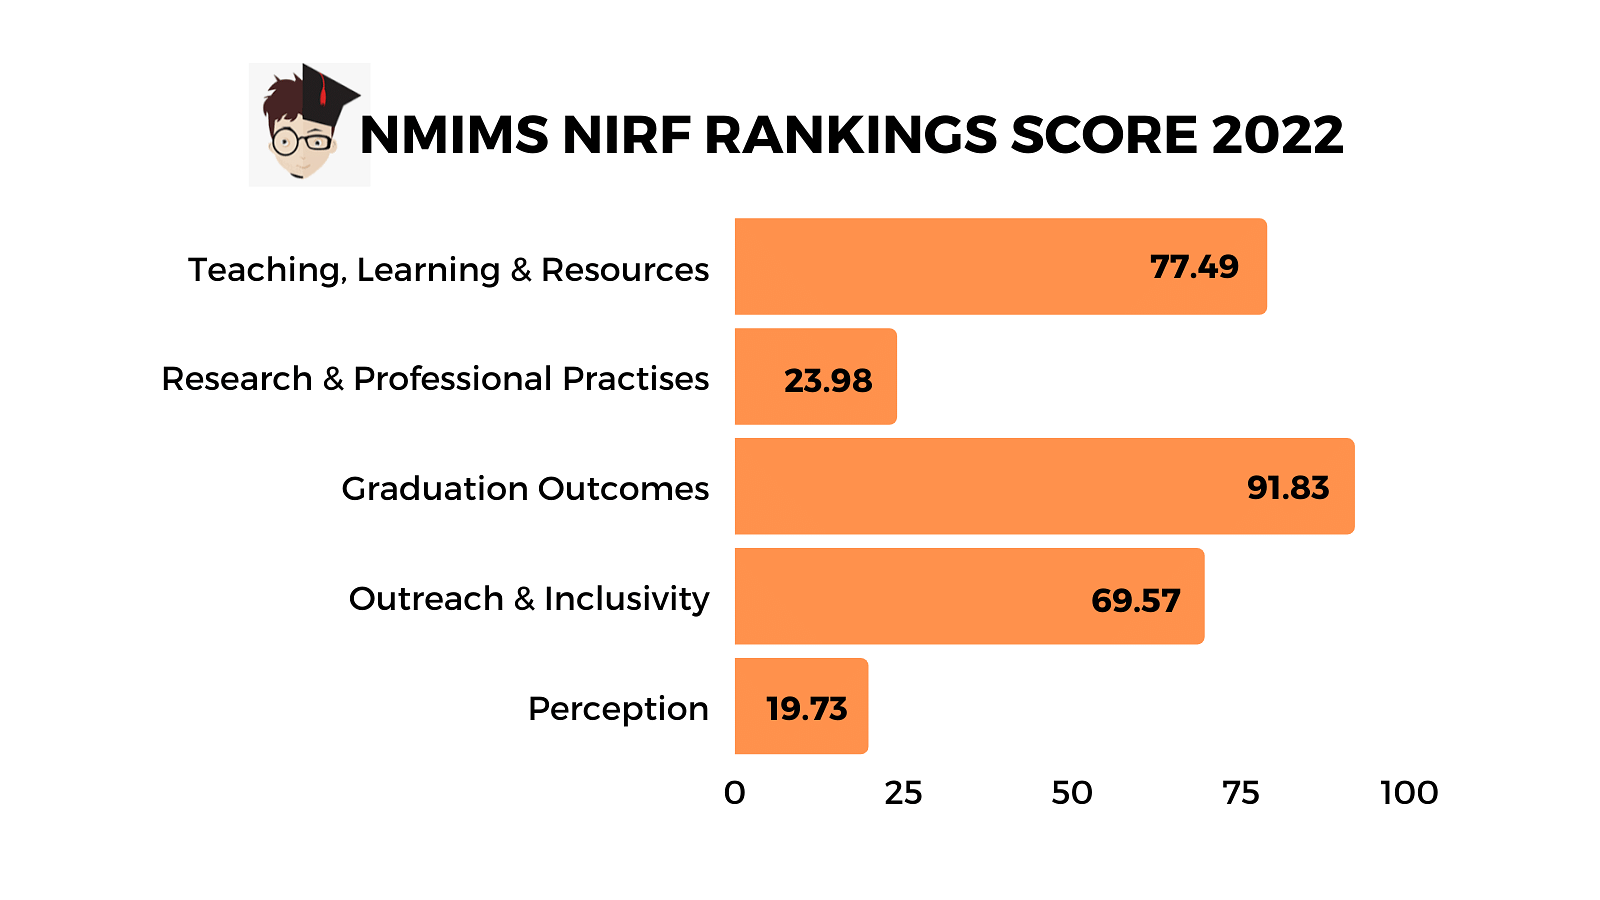 NMIMS NIRF Ranking 2022 Scores